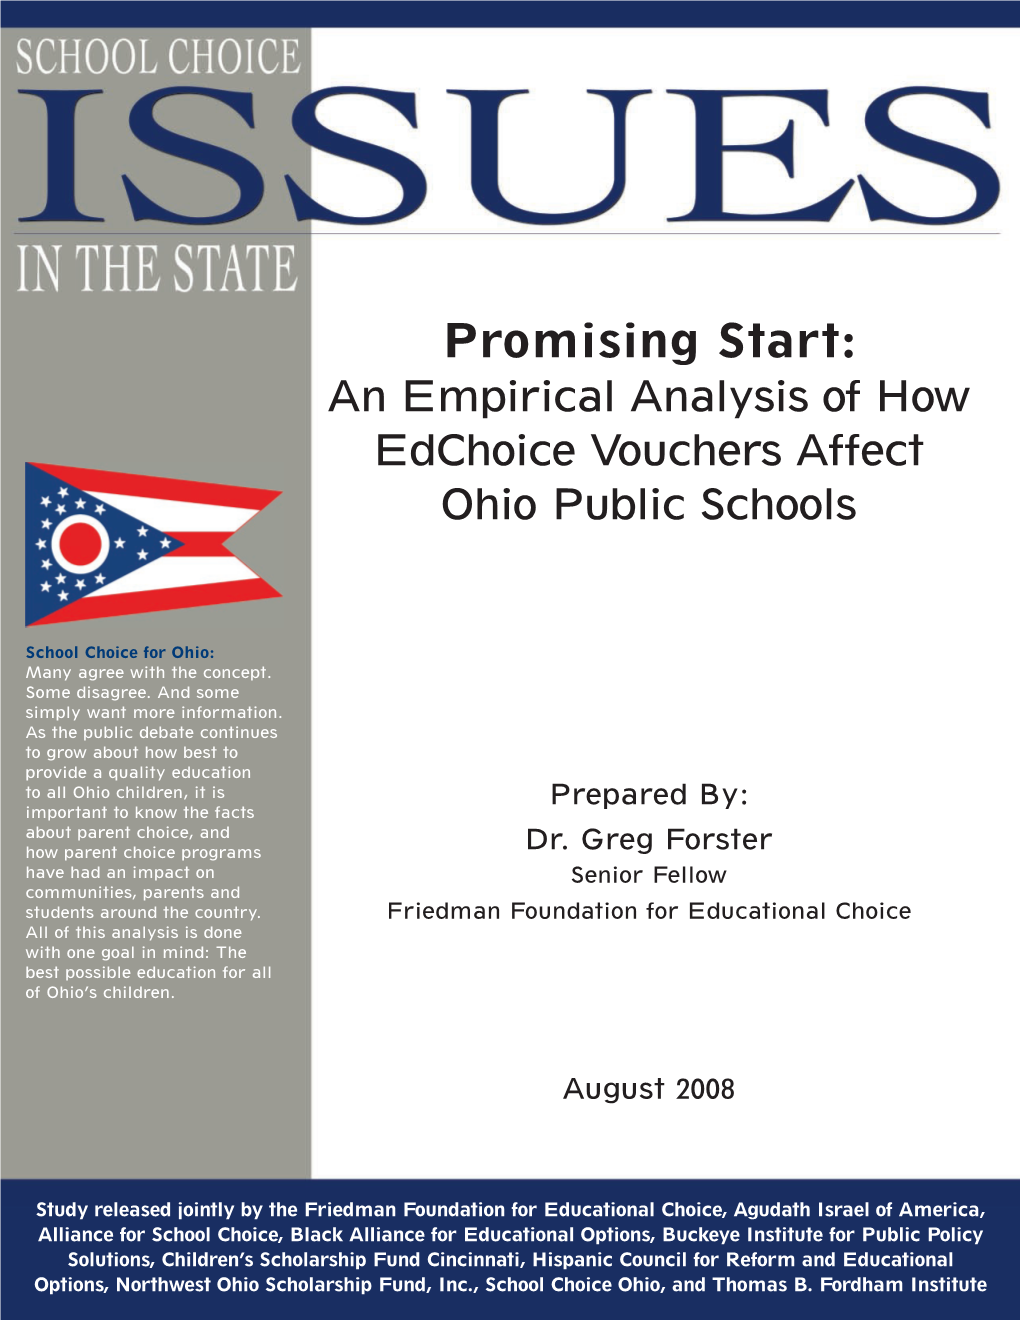 Promising Start: an Empirical Analysis of How Edchoice Vouchers Affect Ohio Public Schools